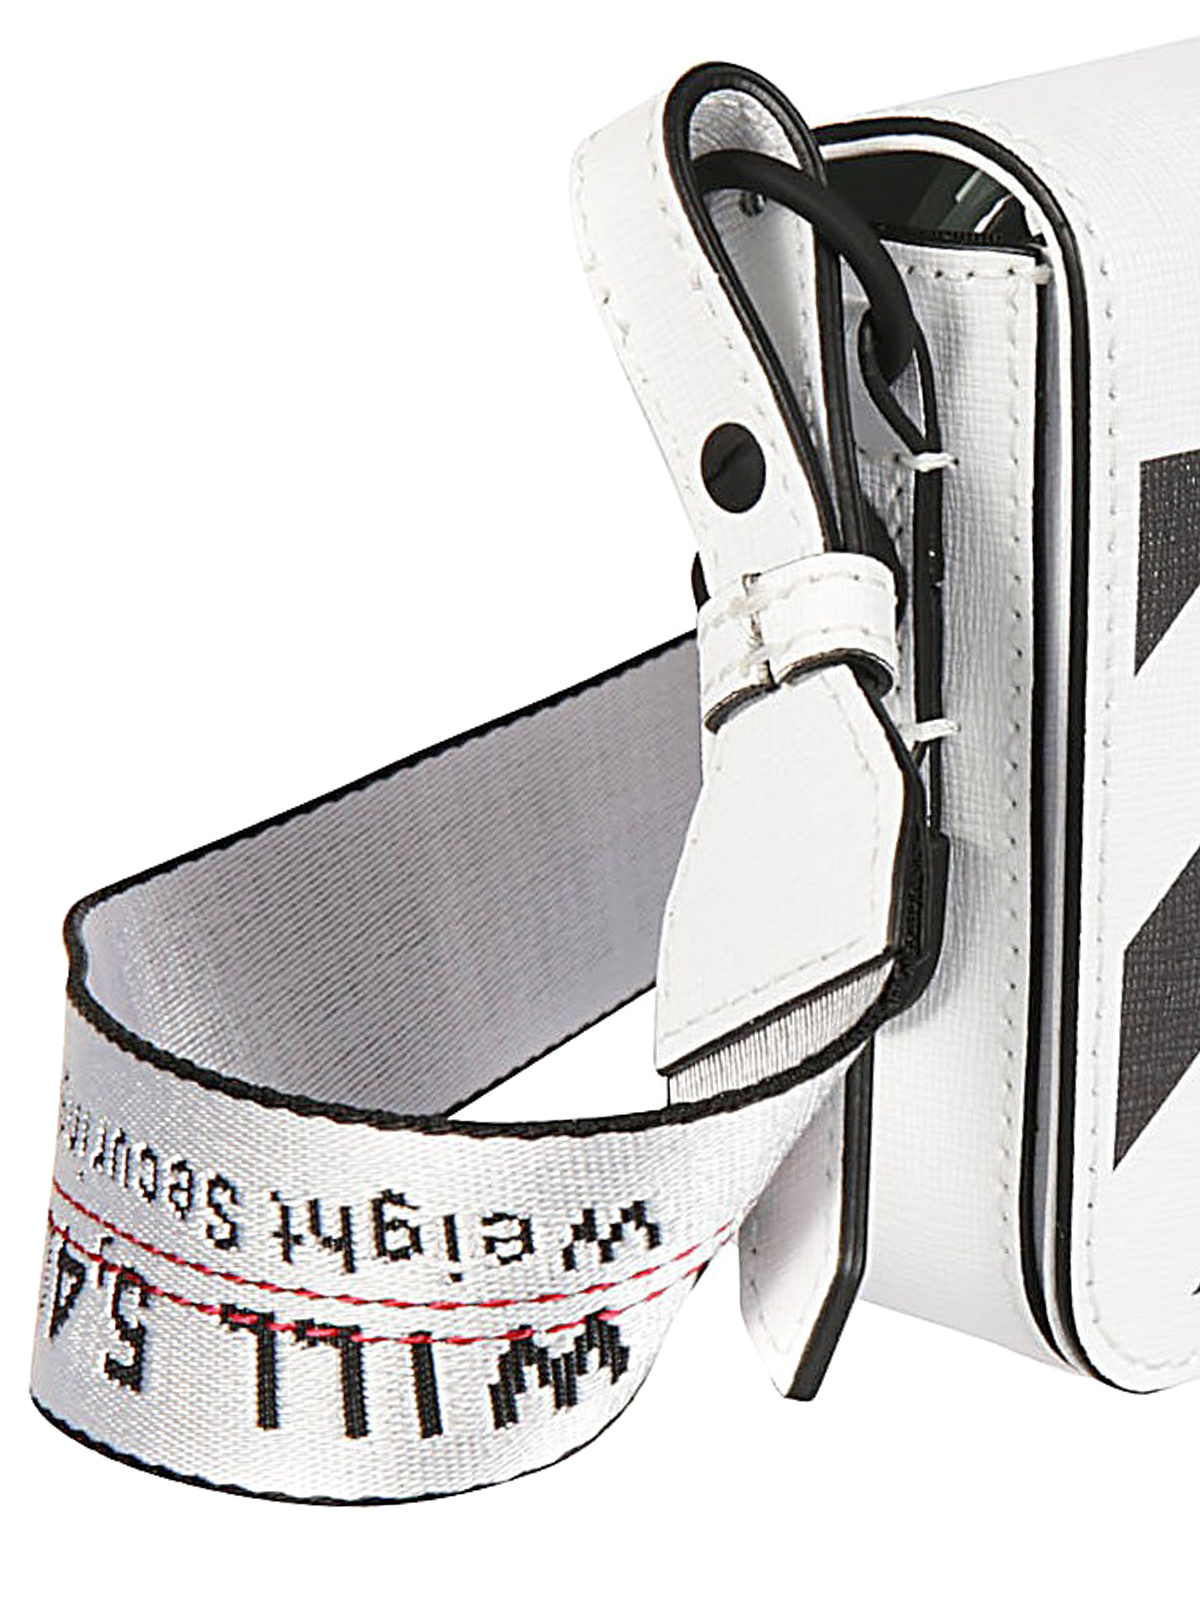 Off White mini crossbody bag striped binder clip